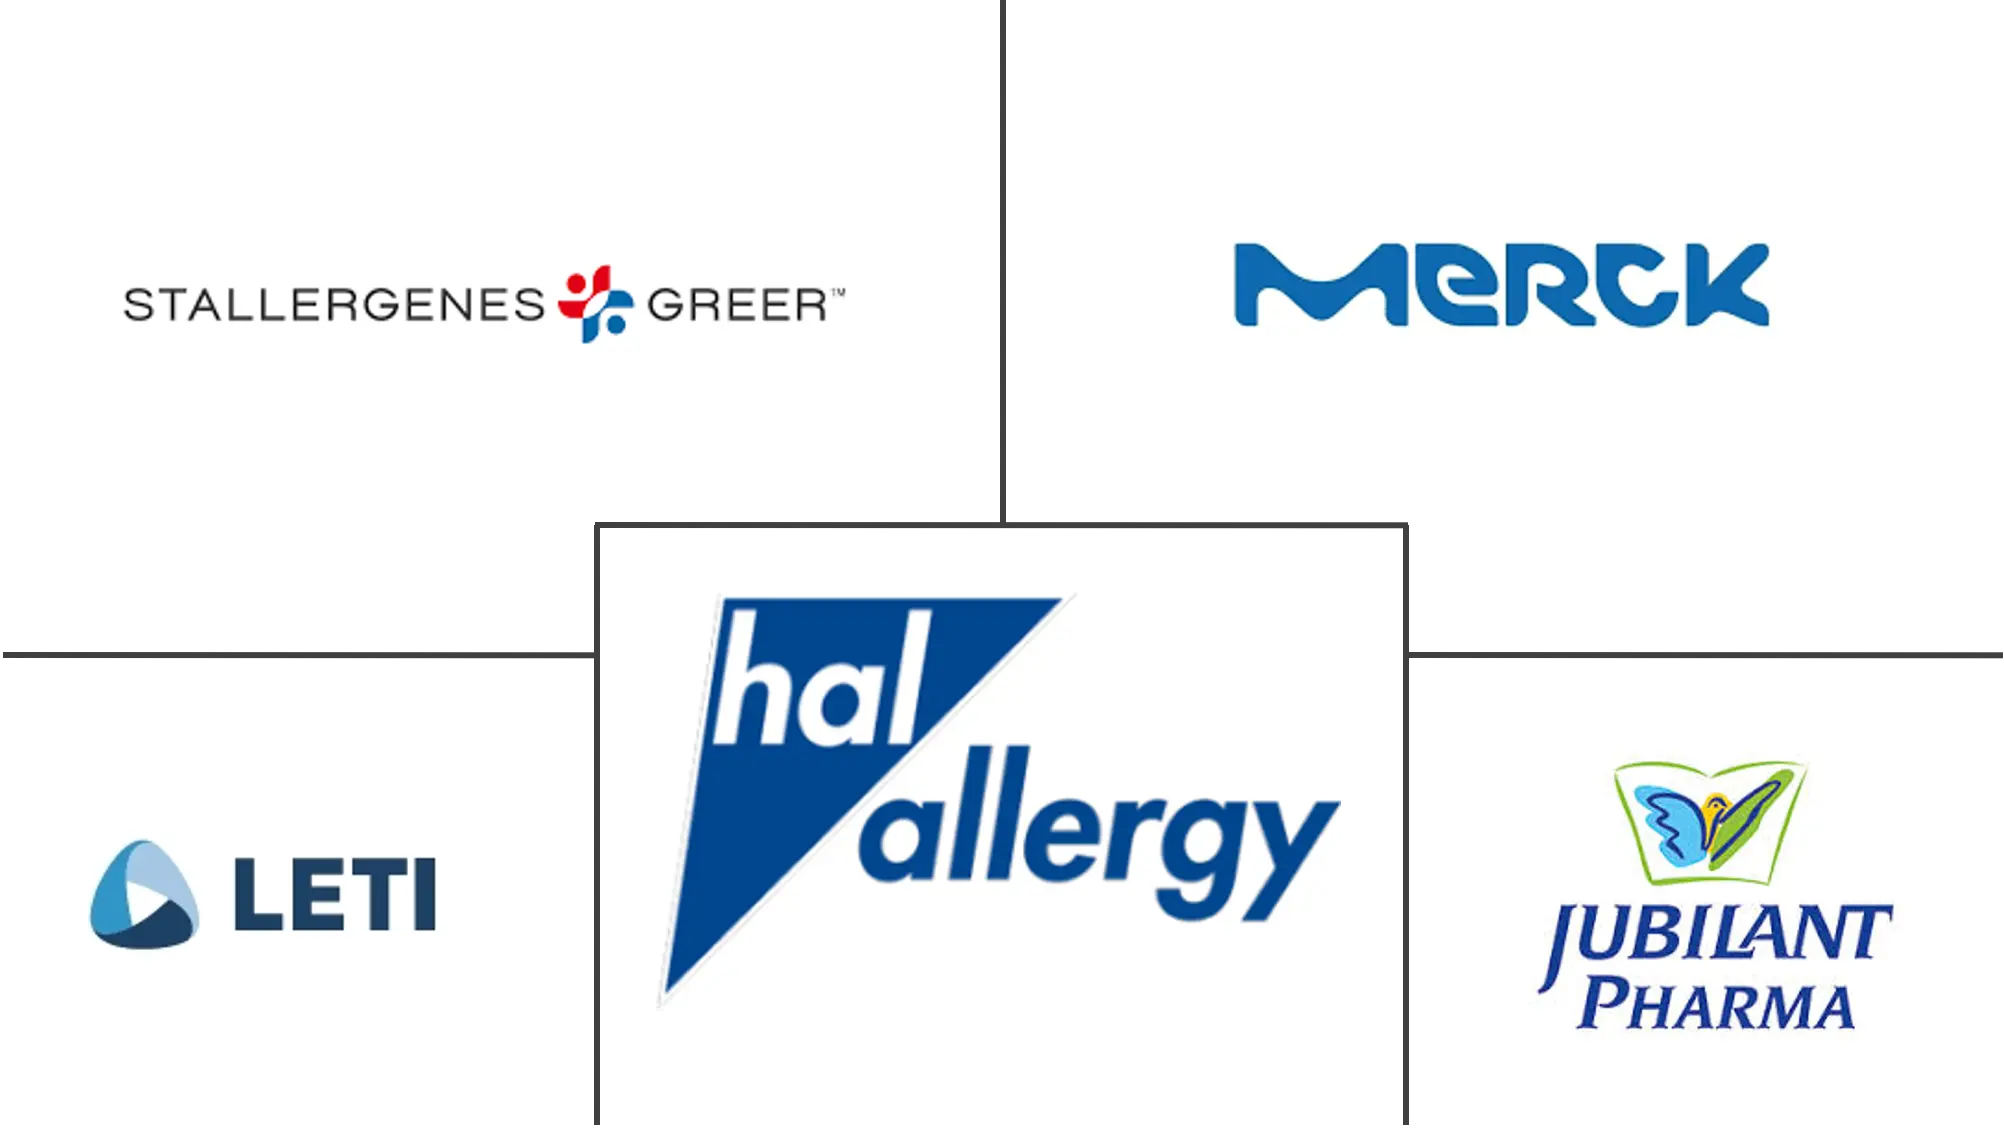  allergy immunotherapy market growth